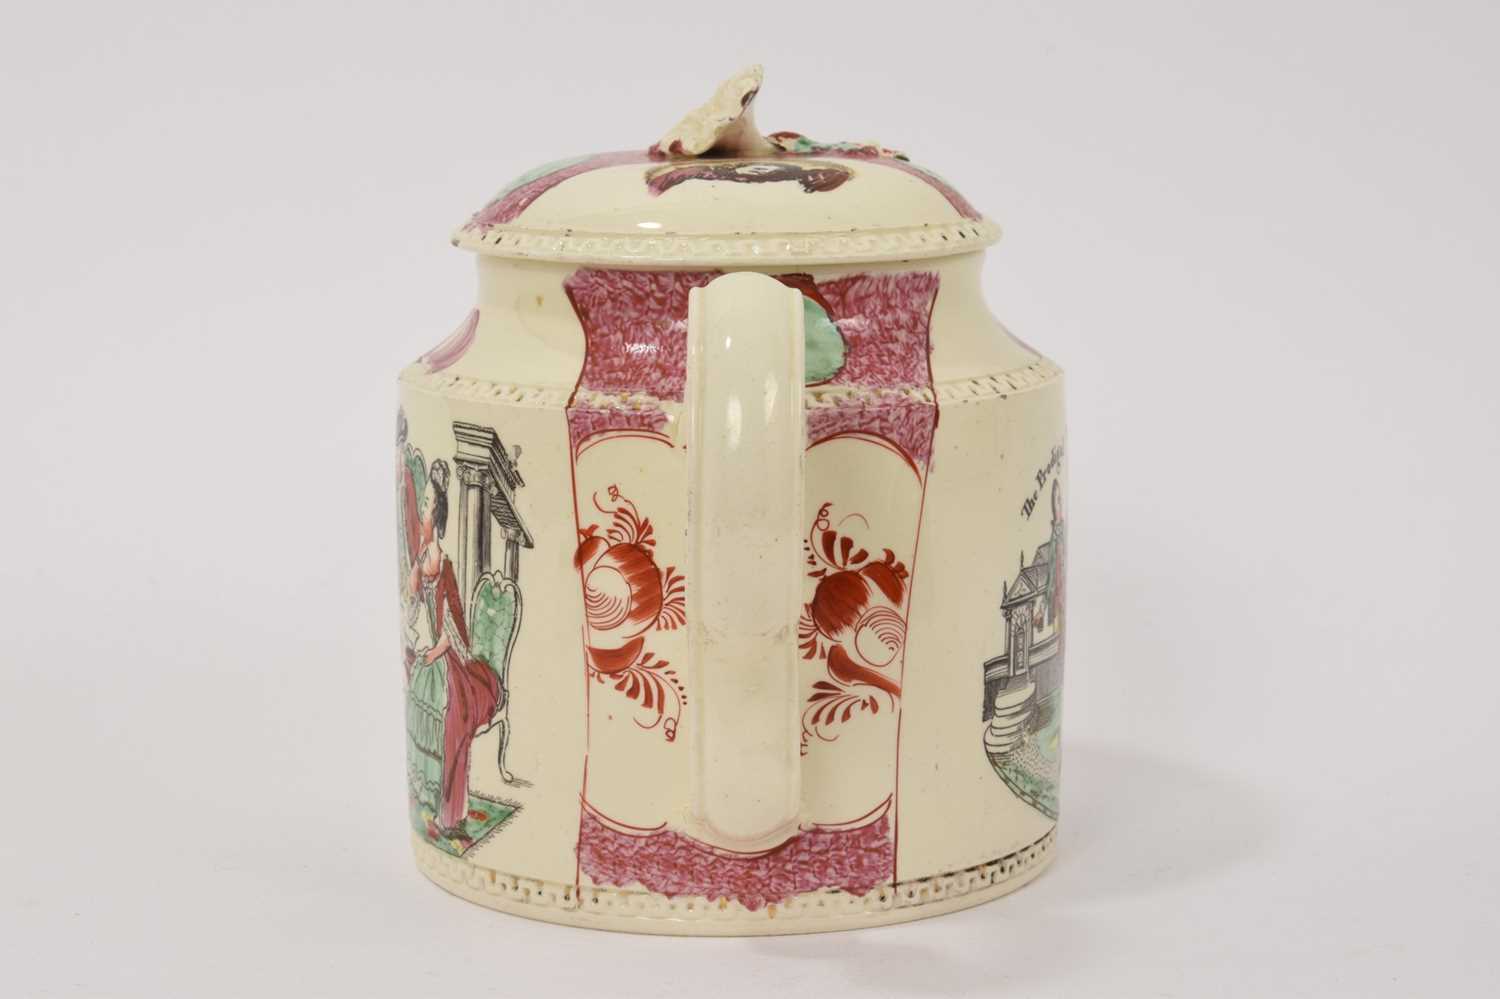 18th century creamware teapot by William Greatbatch - The prodigal son taking leave - Bild 4 aus 8